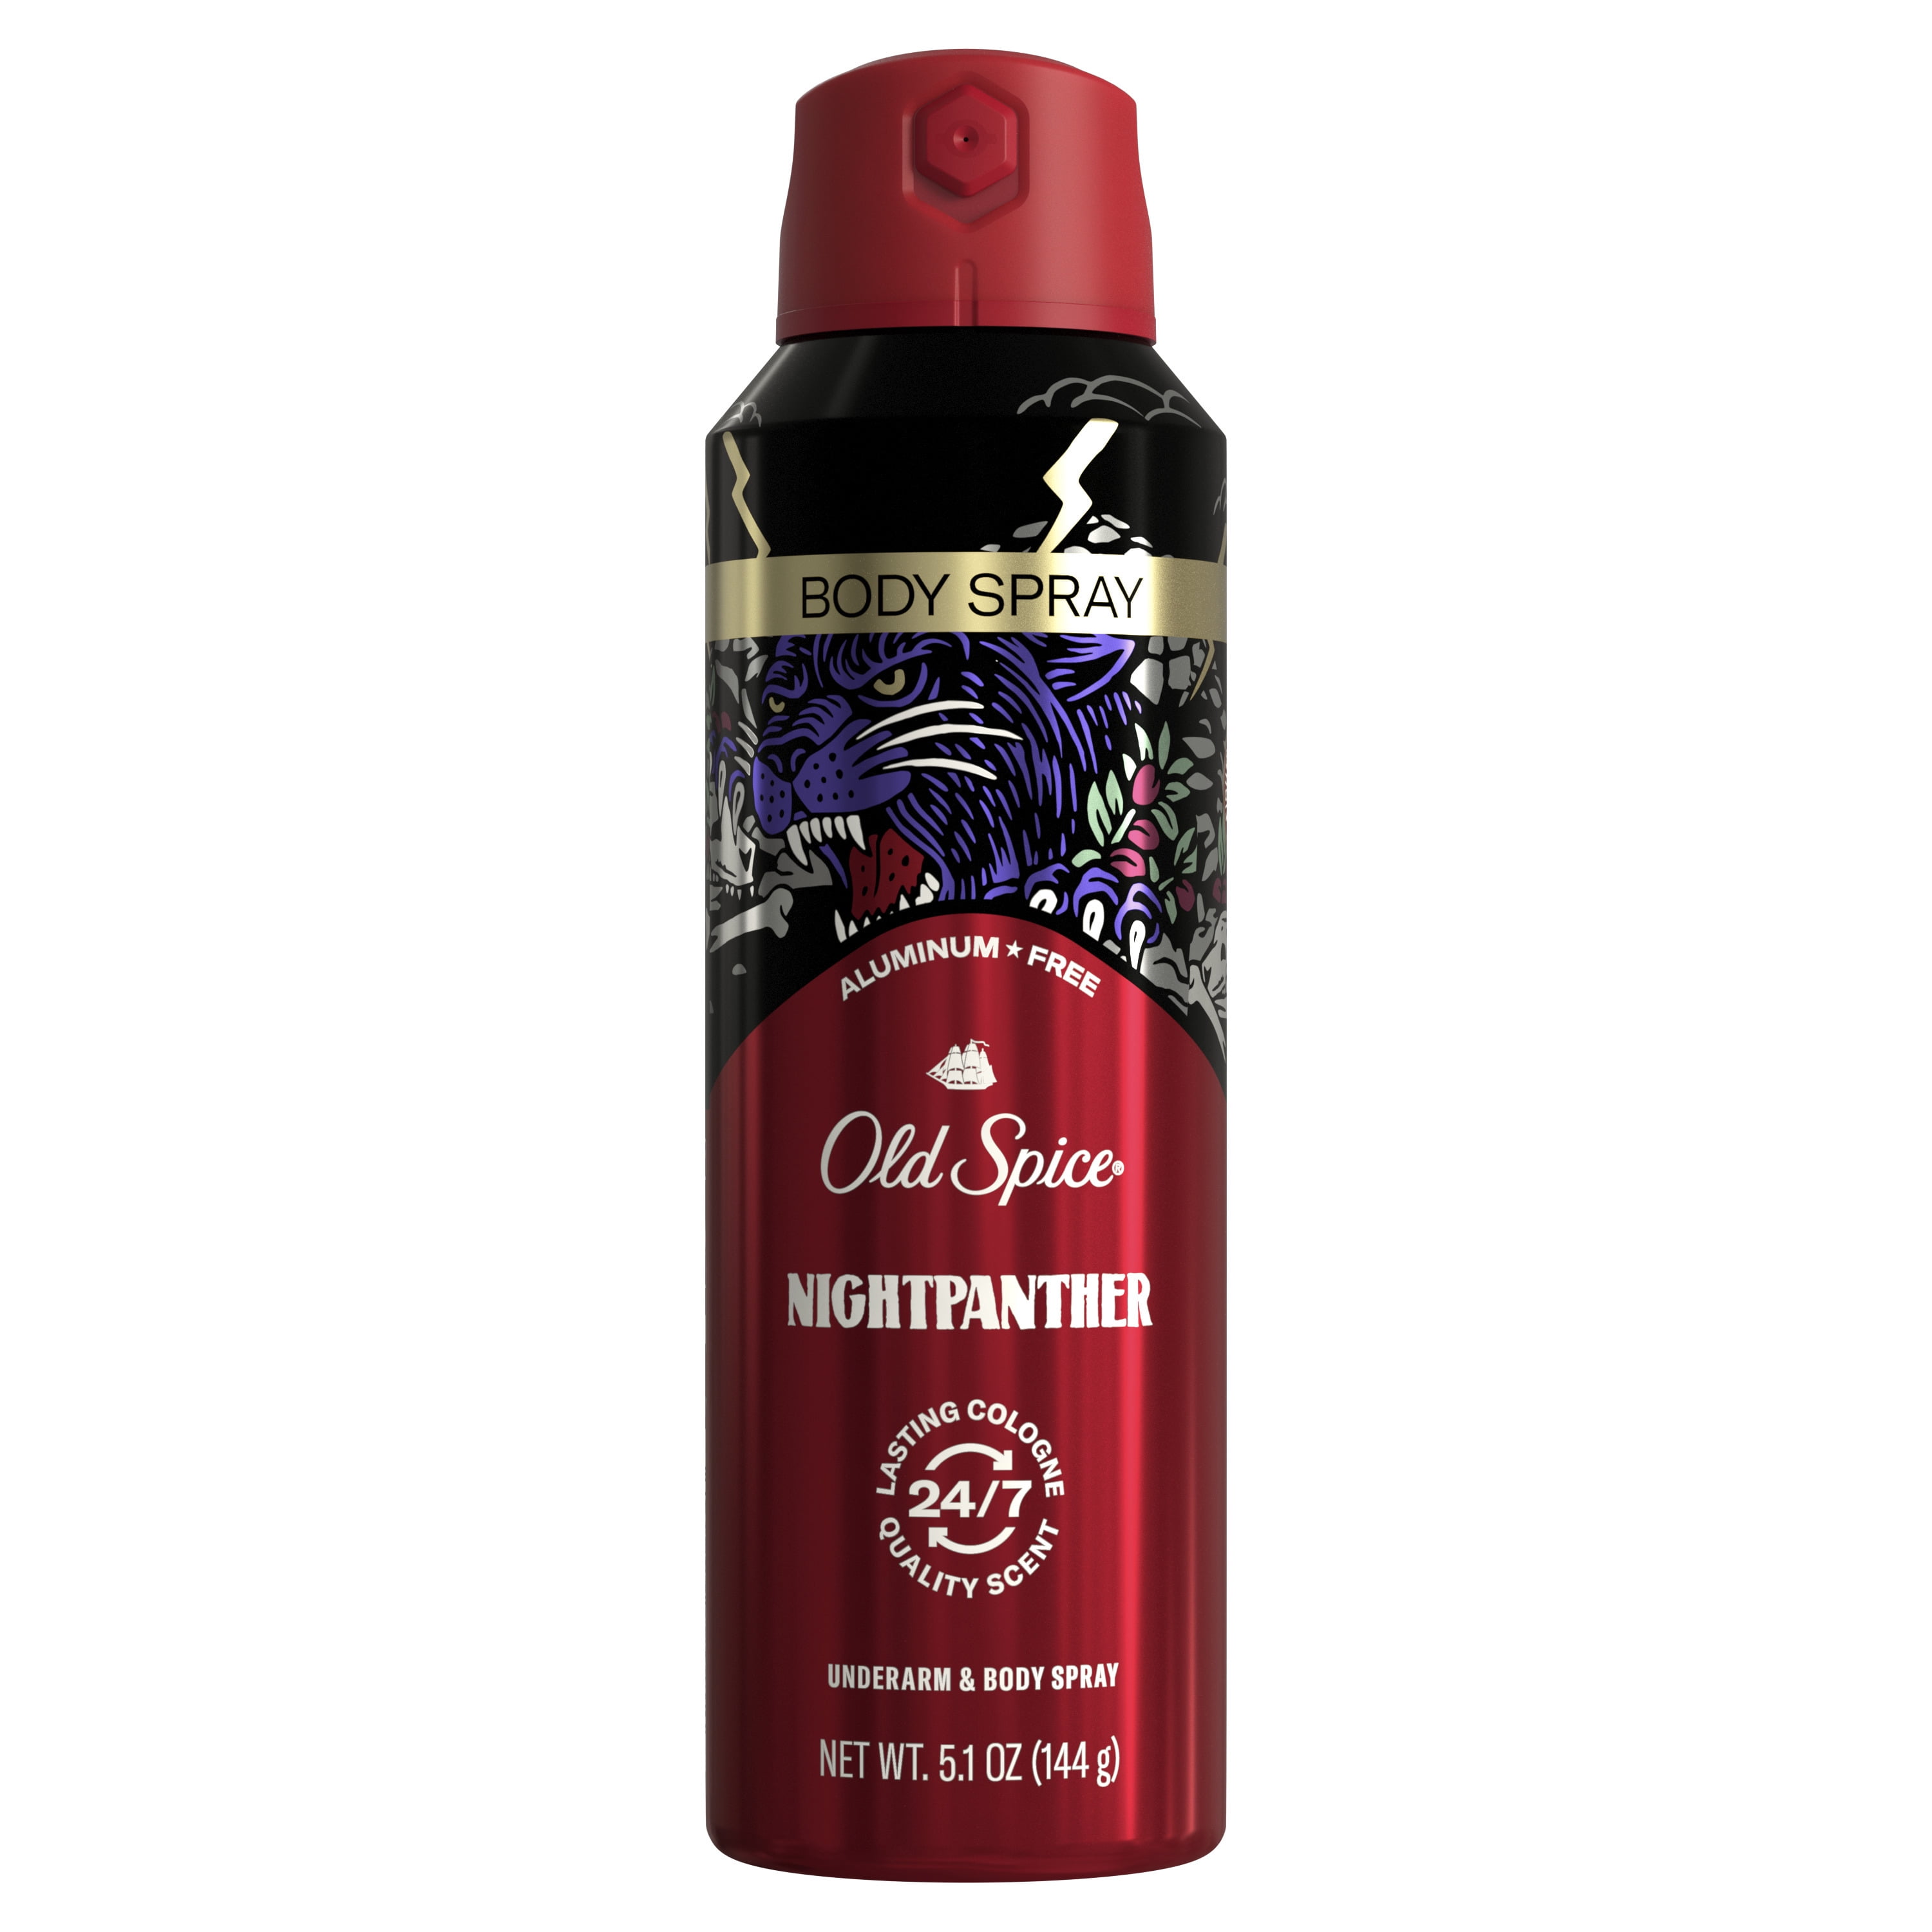 Old Spice NightPanther Body Spray for Men, 5.1 oz